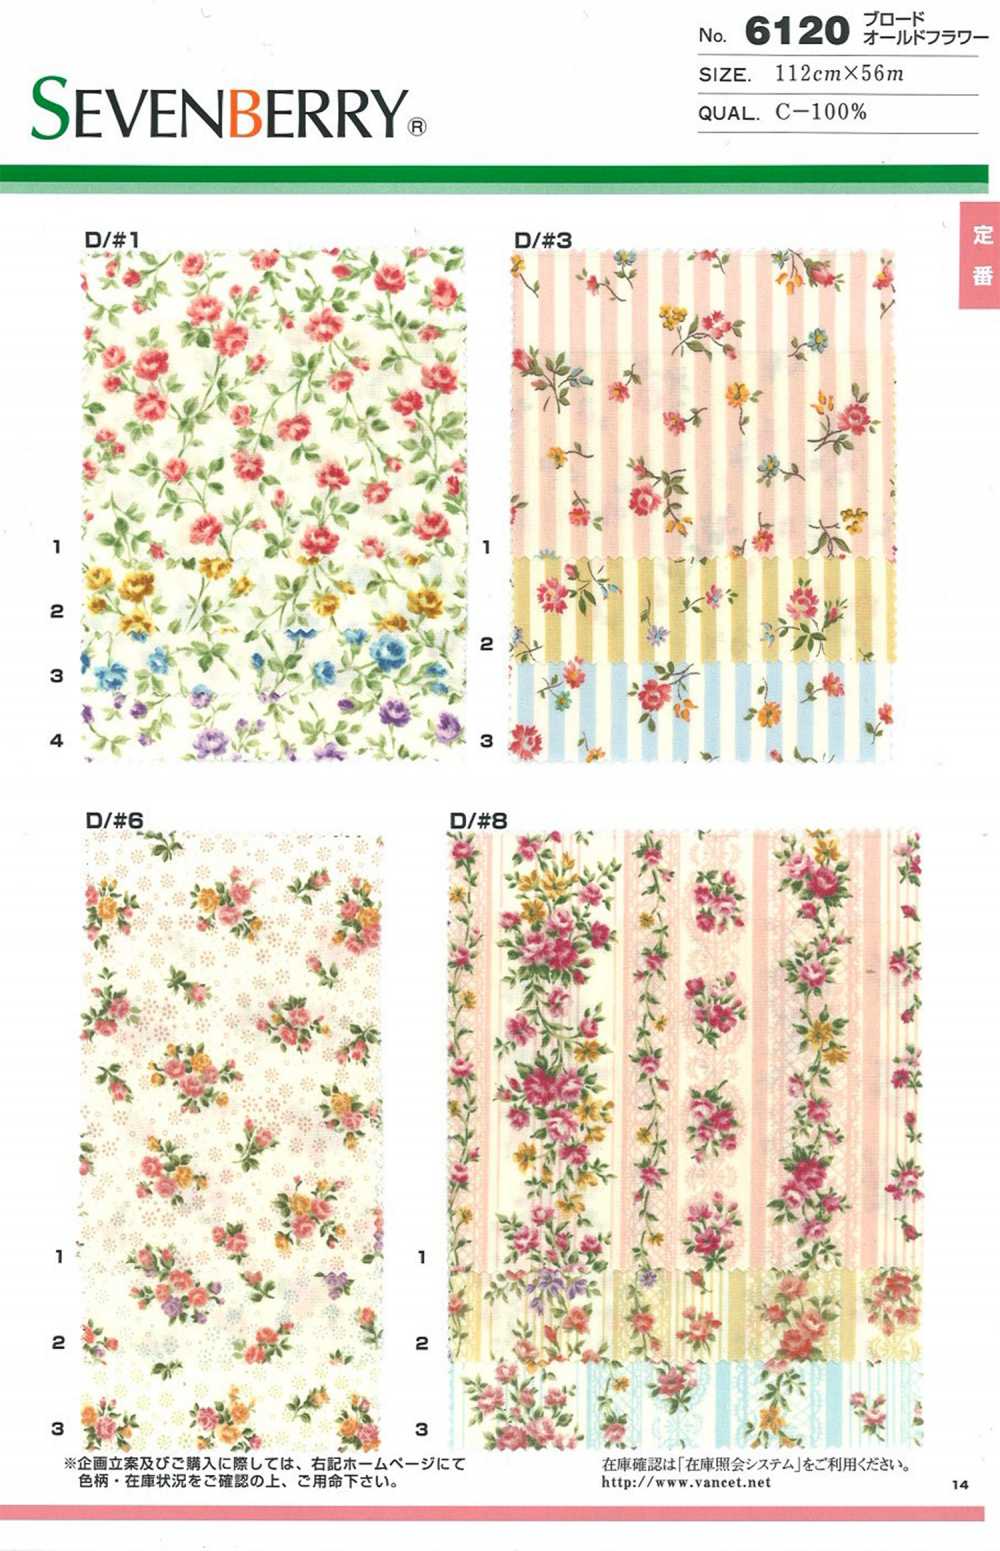 6120 SEVENBERRY Broadcloth Old Flower[Textile / Fabric] VANCET